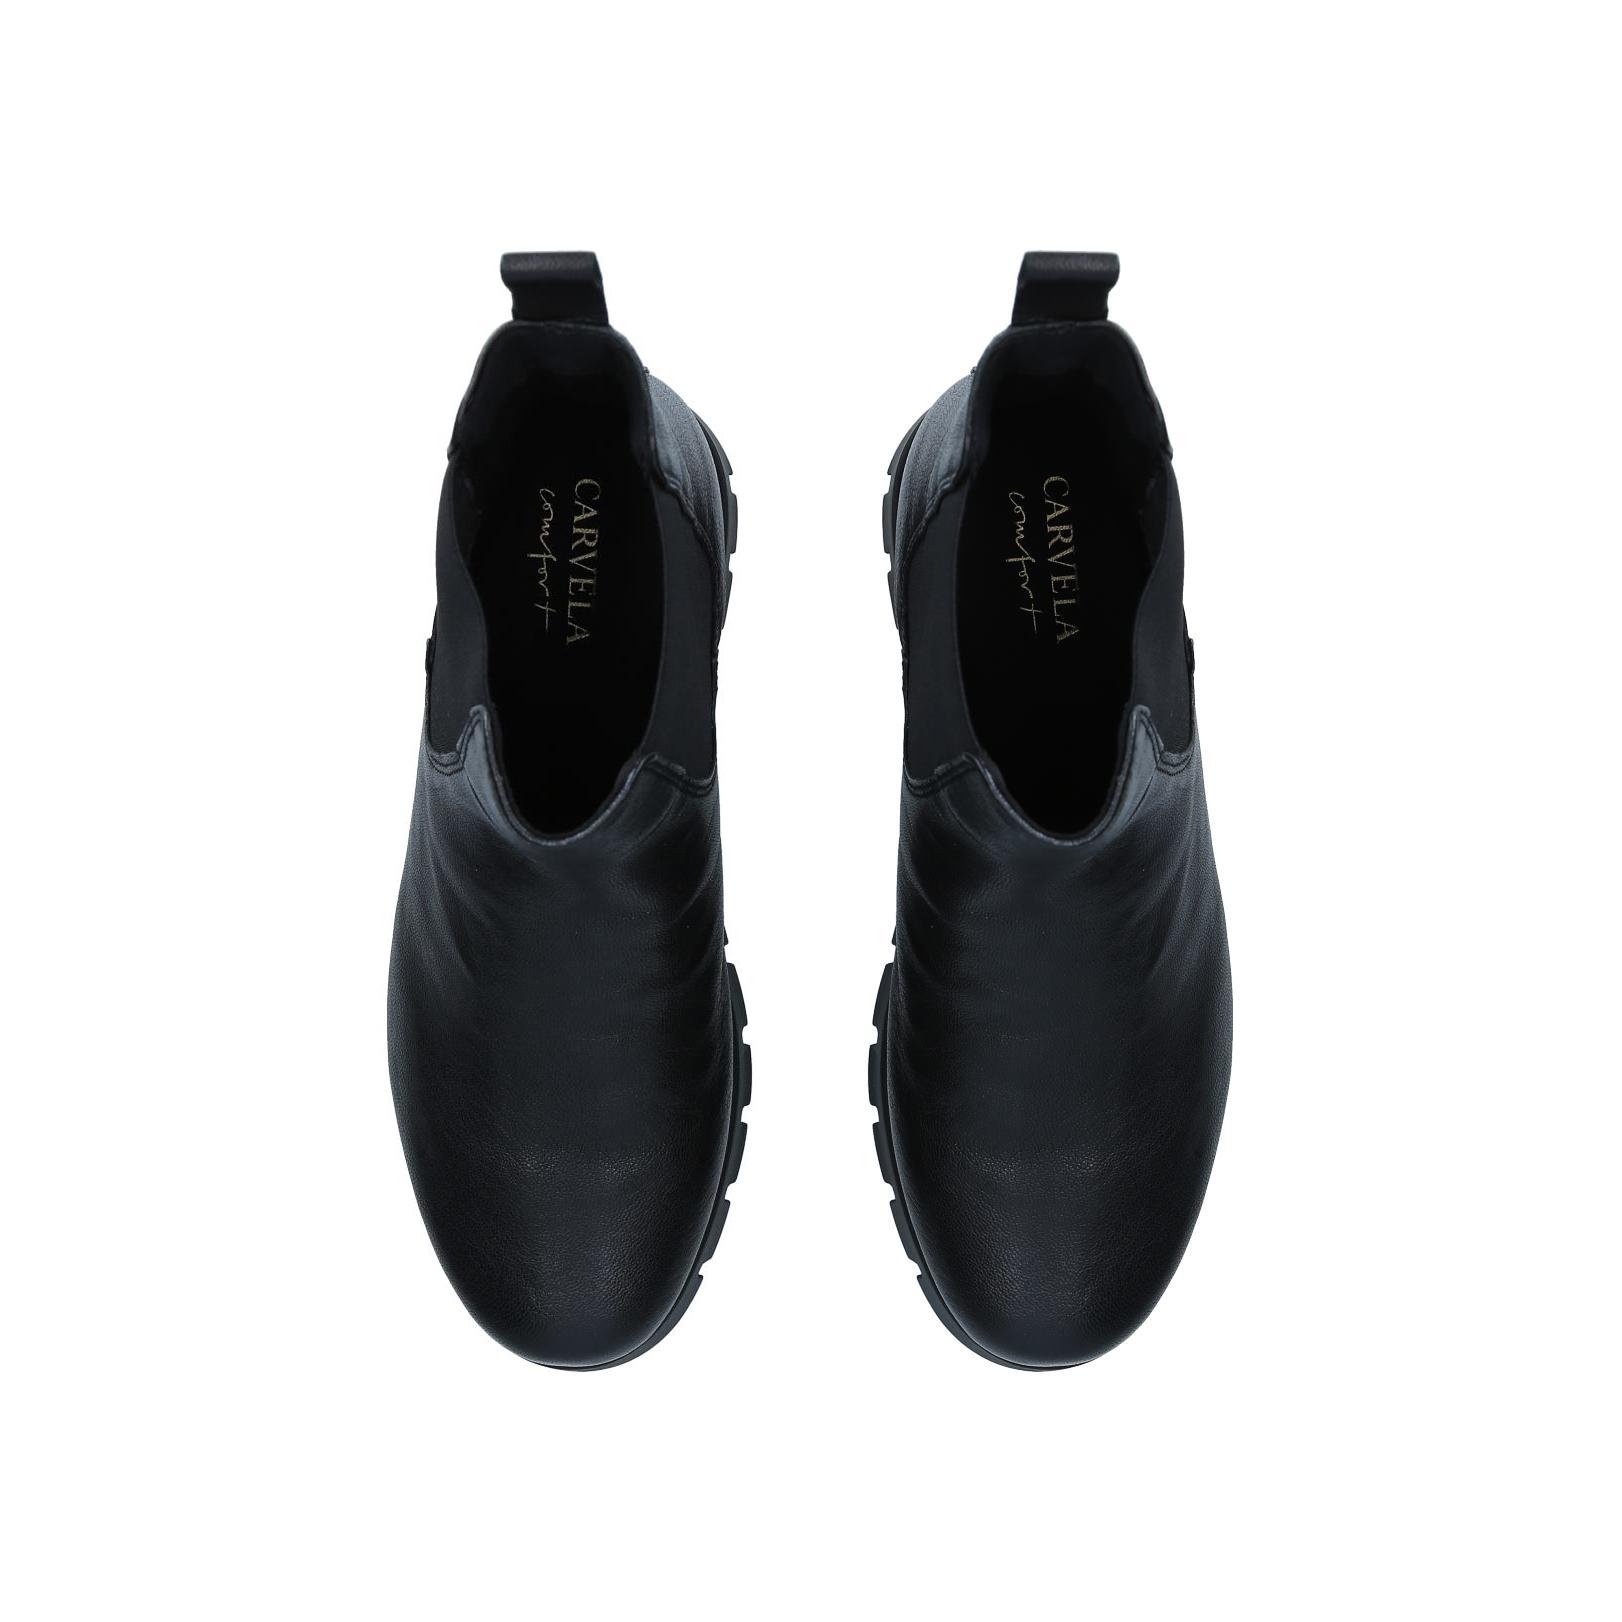 RUN CHELSEA - CARVELA COMFORT Ankle Boots